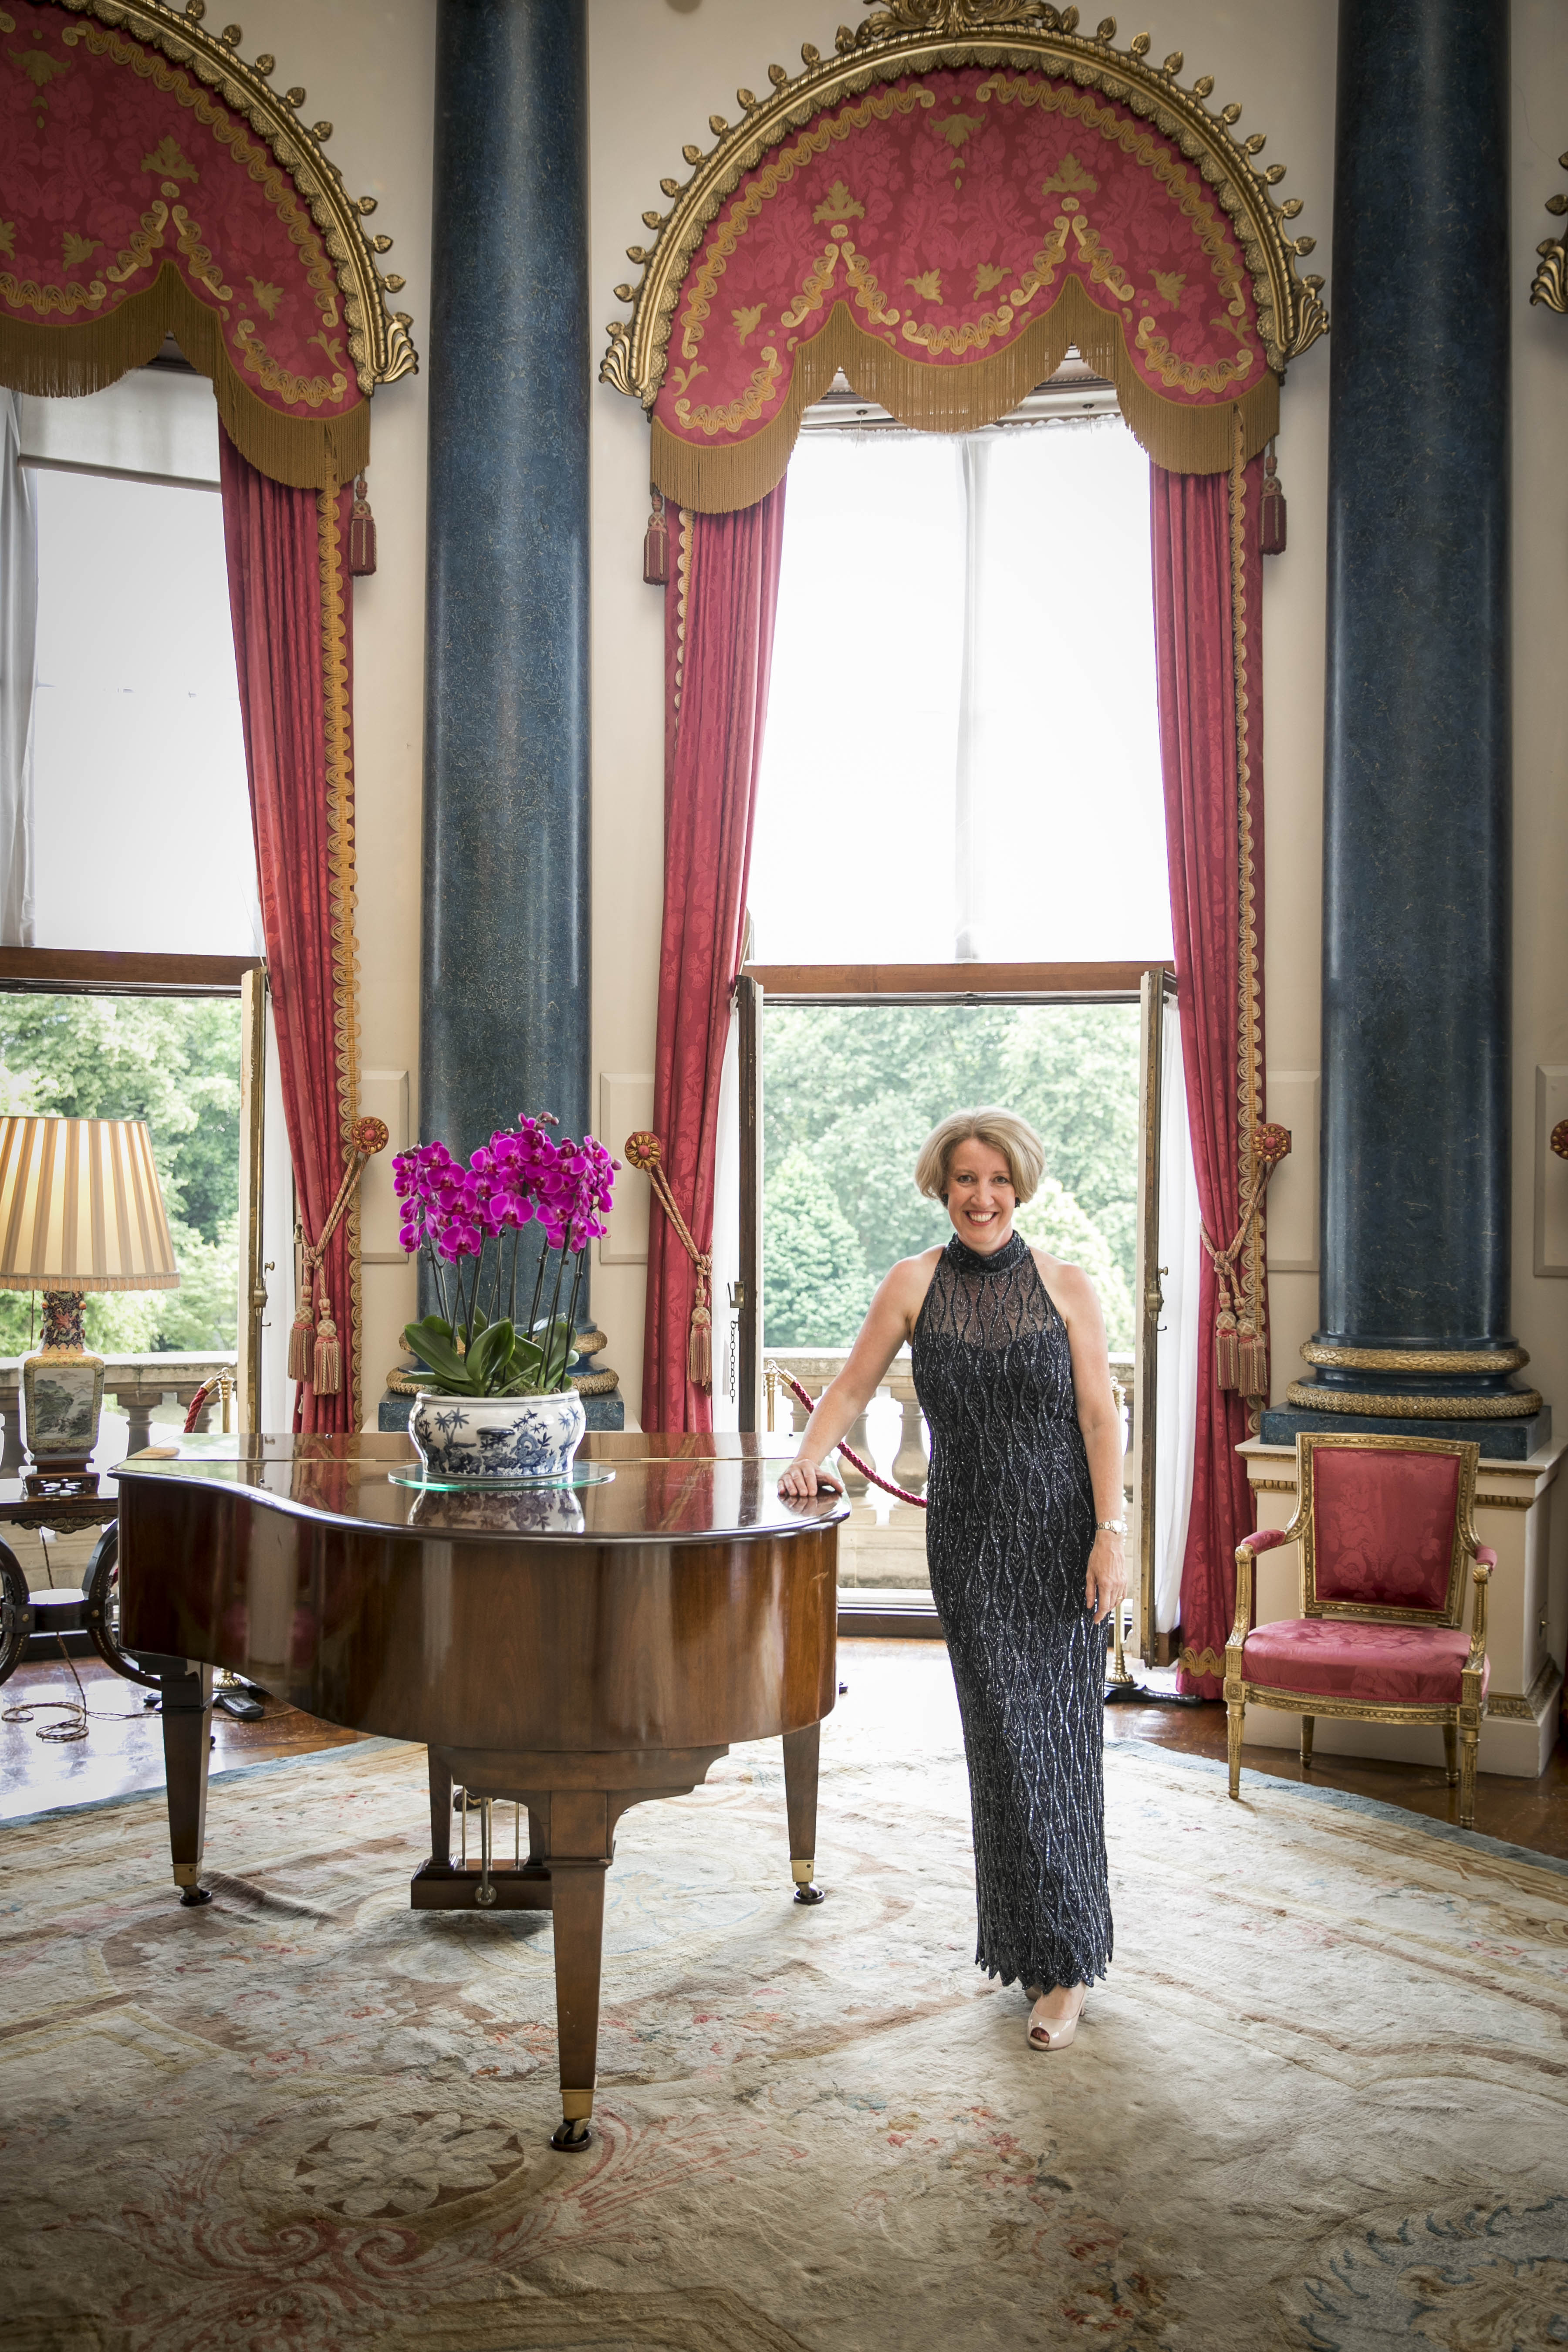 Buckingham Palace Pianist, Sandra Lambert